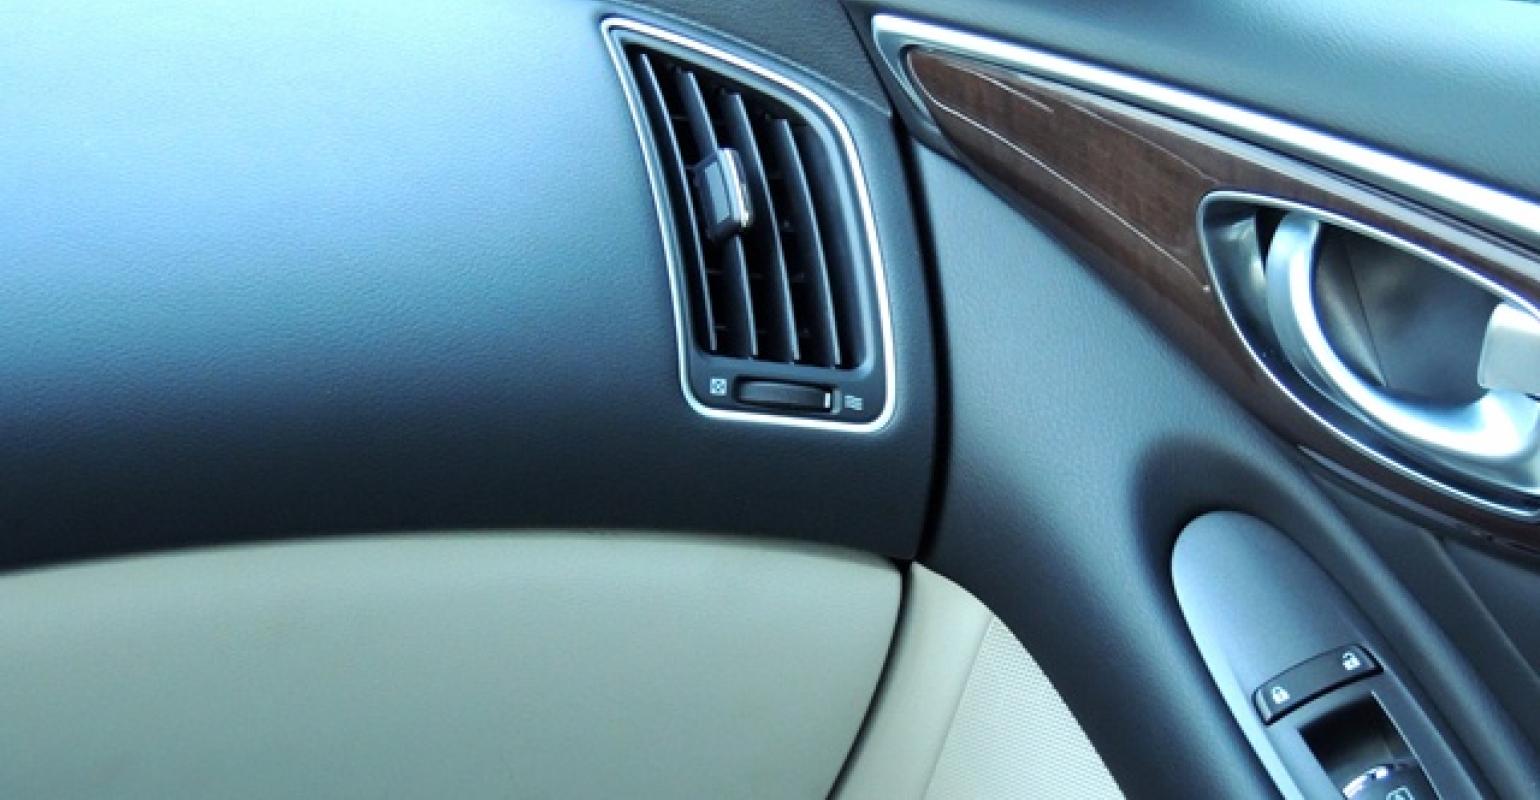 2014 Ward S 10 Best Interiors Nominee Infiniti Q50s Hybrid